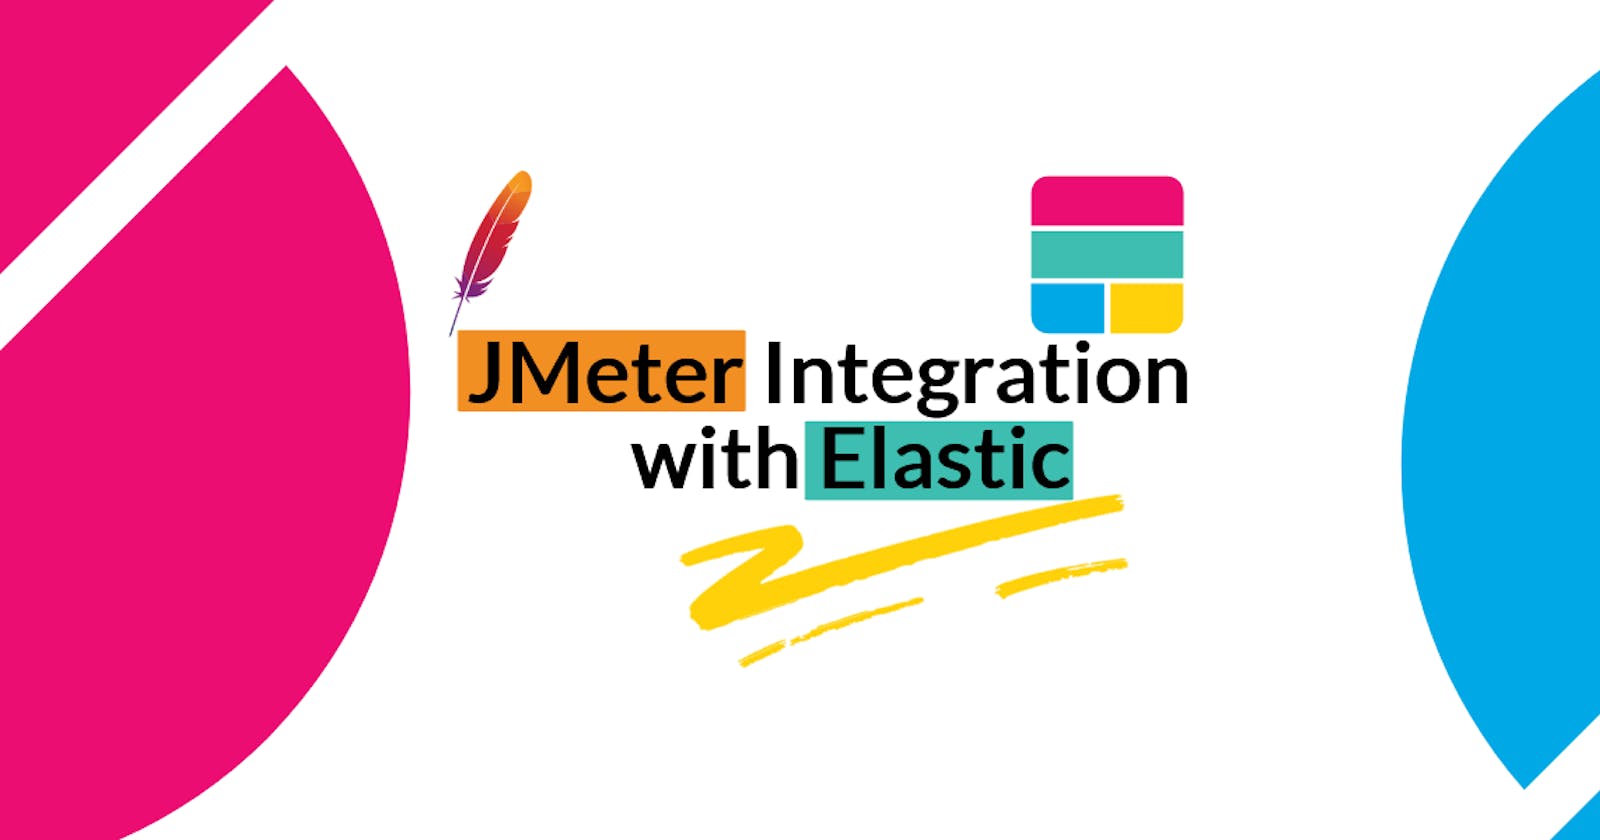 JMeter Integration with Elastic